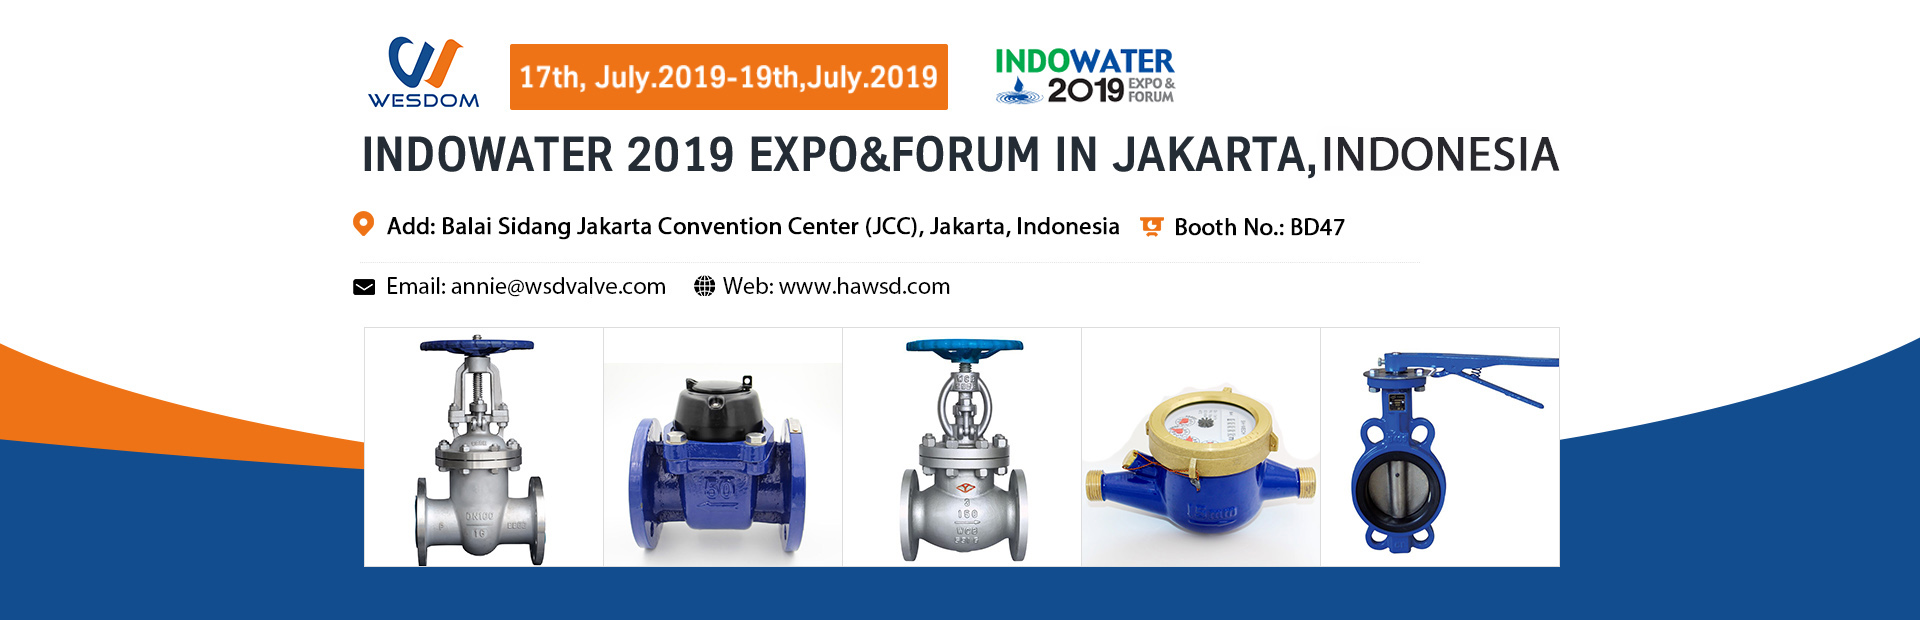 INDOWATER 2019 EXPO&FORUM in Jakarta, Indonesia